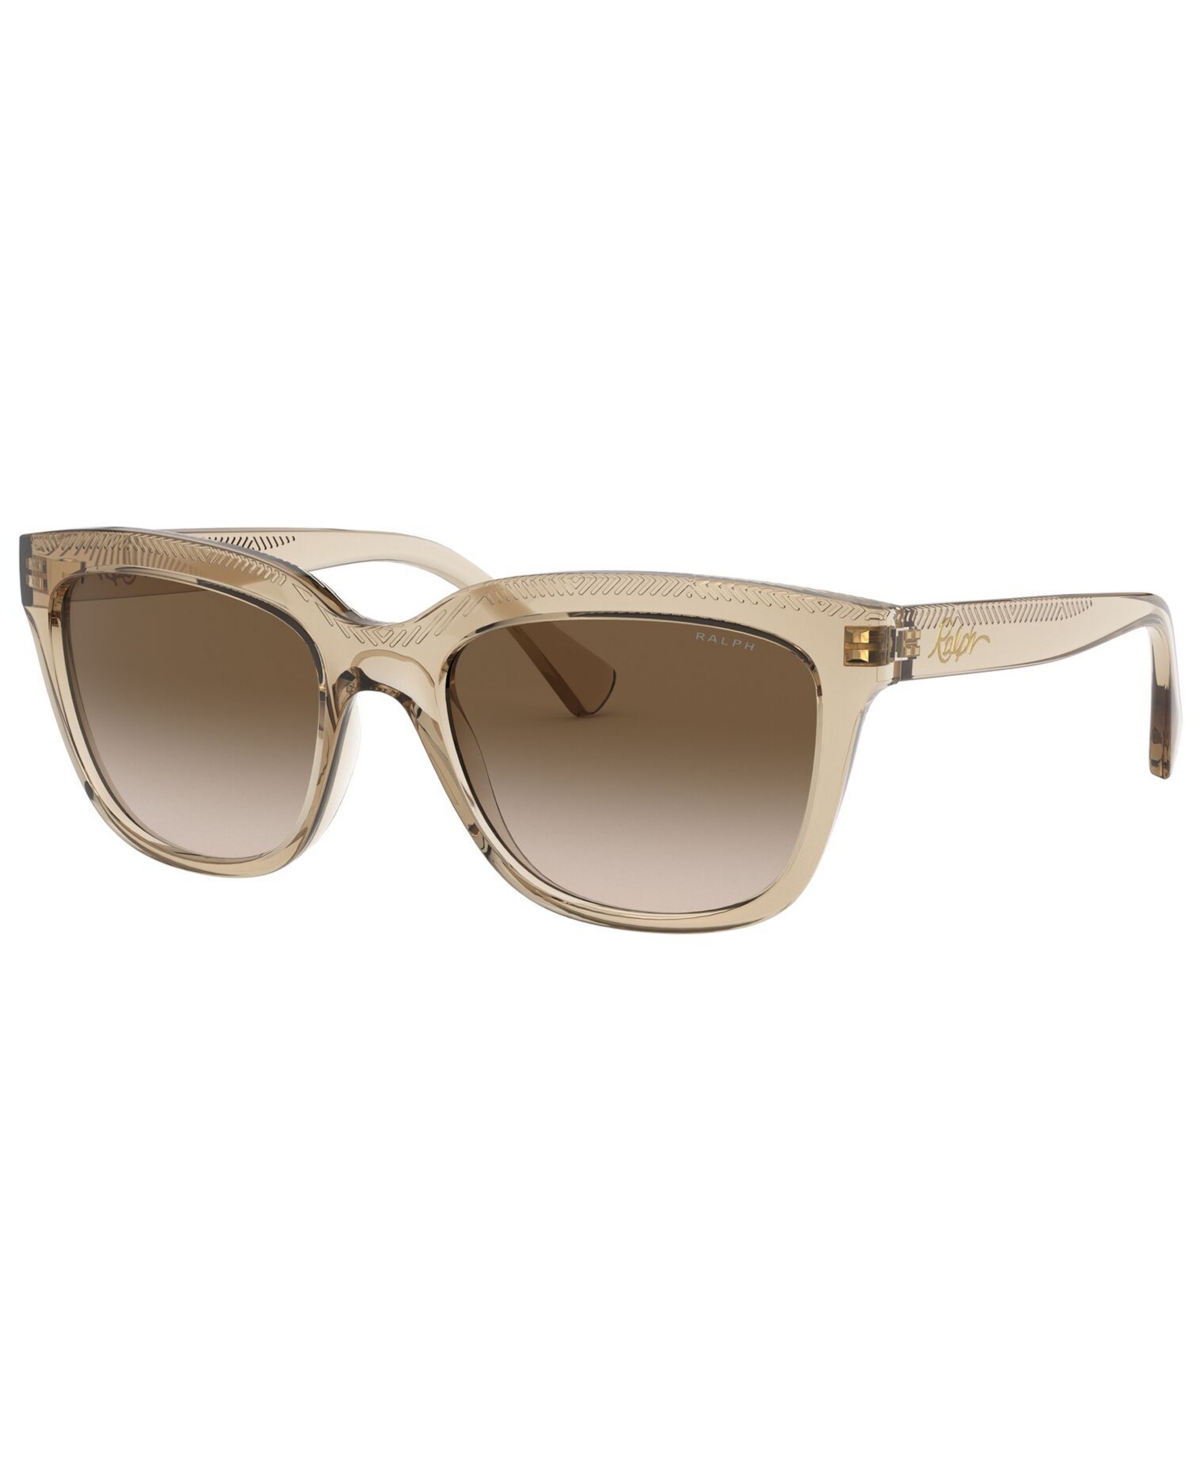 Sunglasses, RA5261 - TRASPARENT BROWN/GRADIENT BROWN